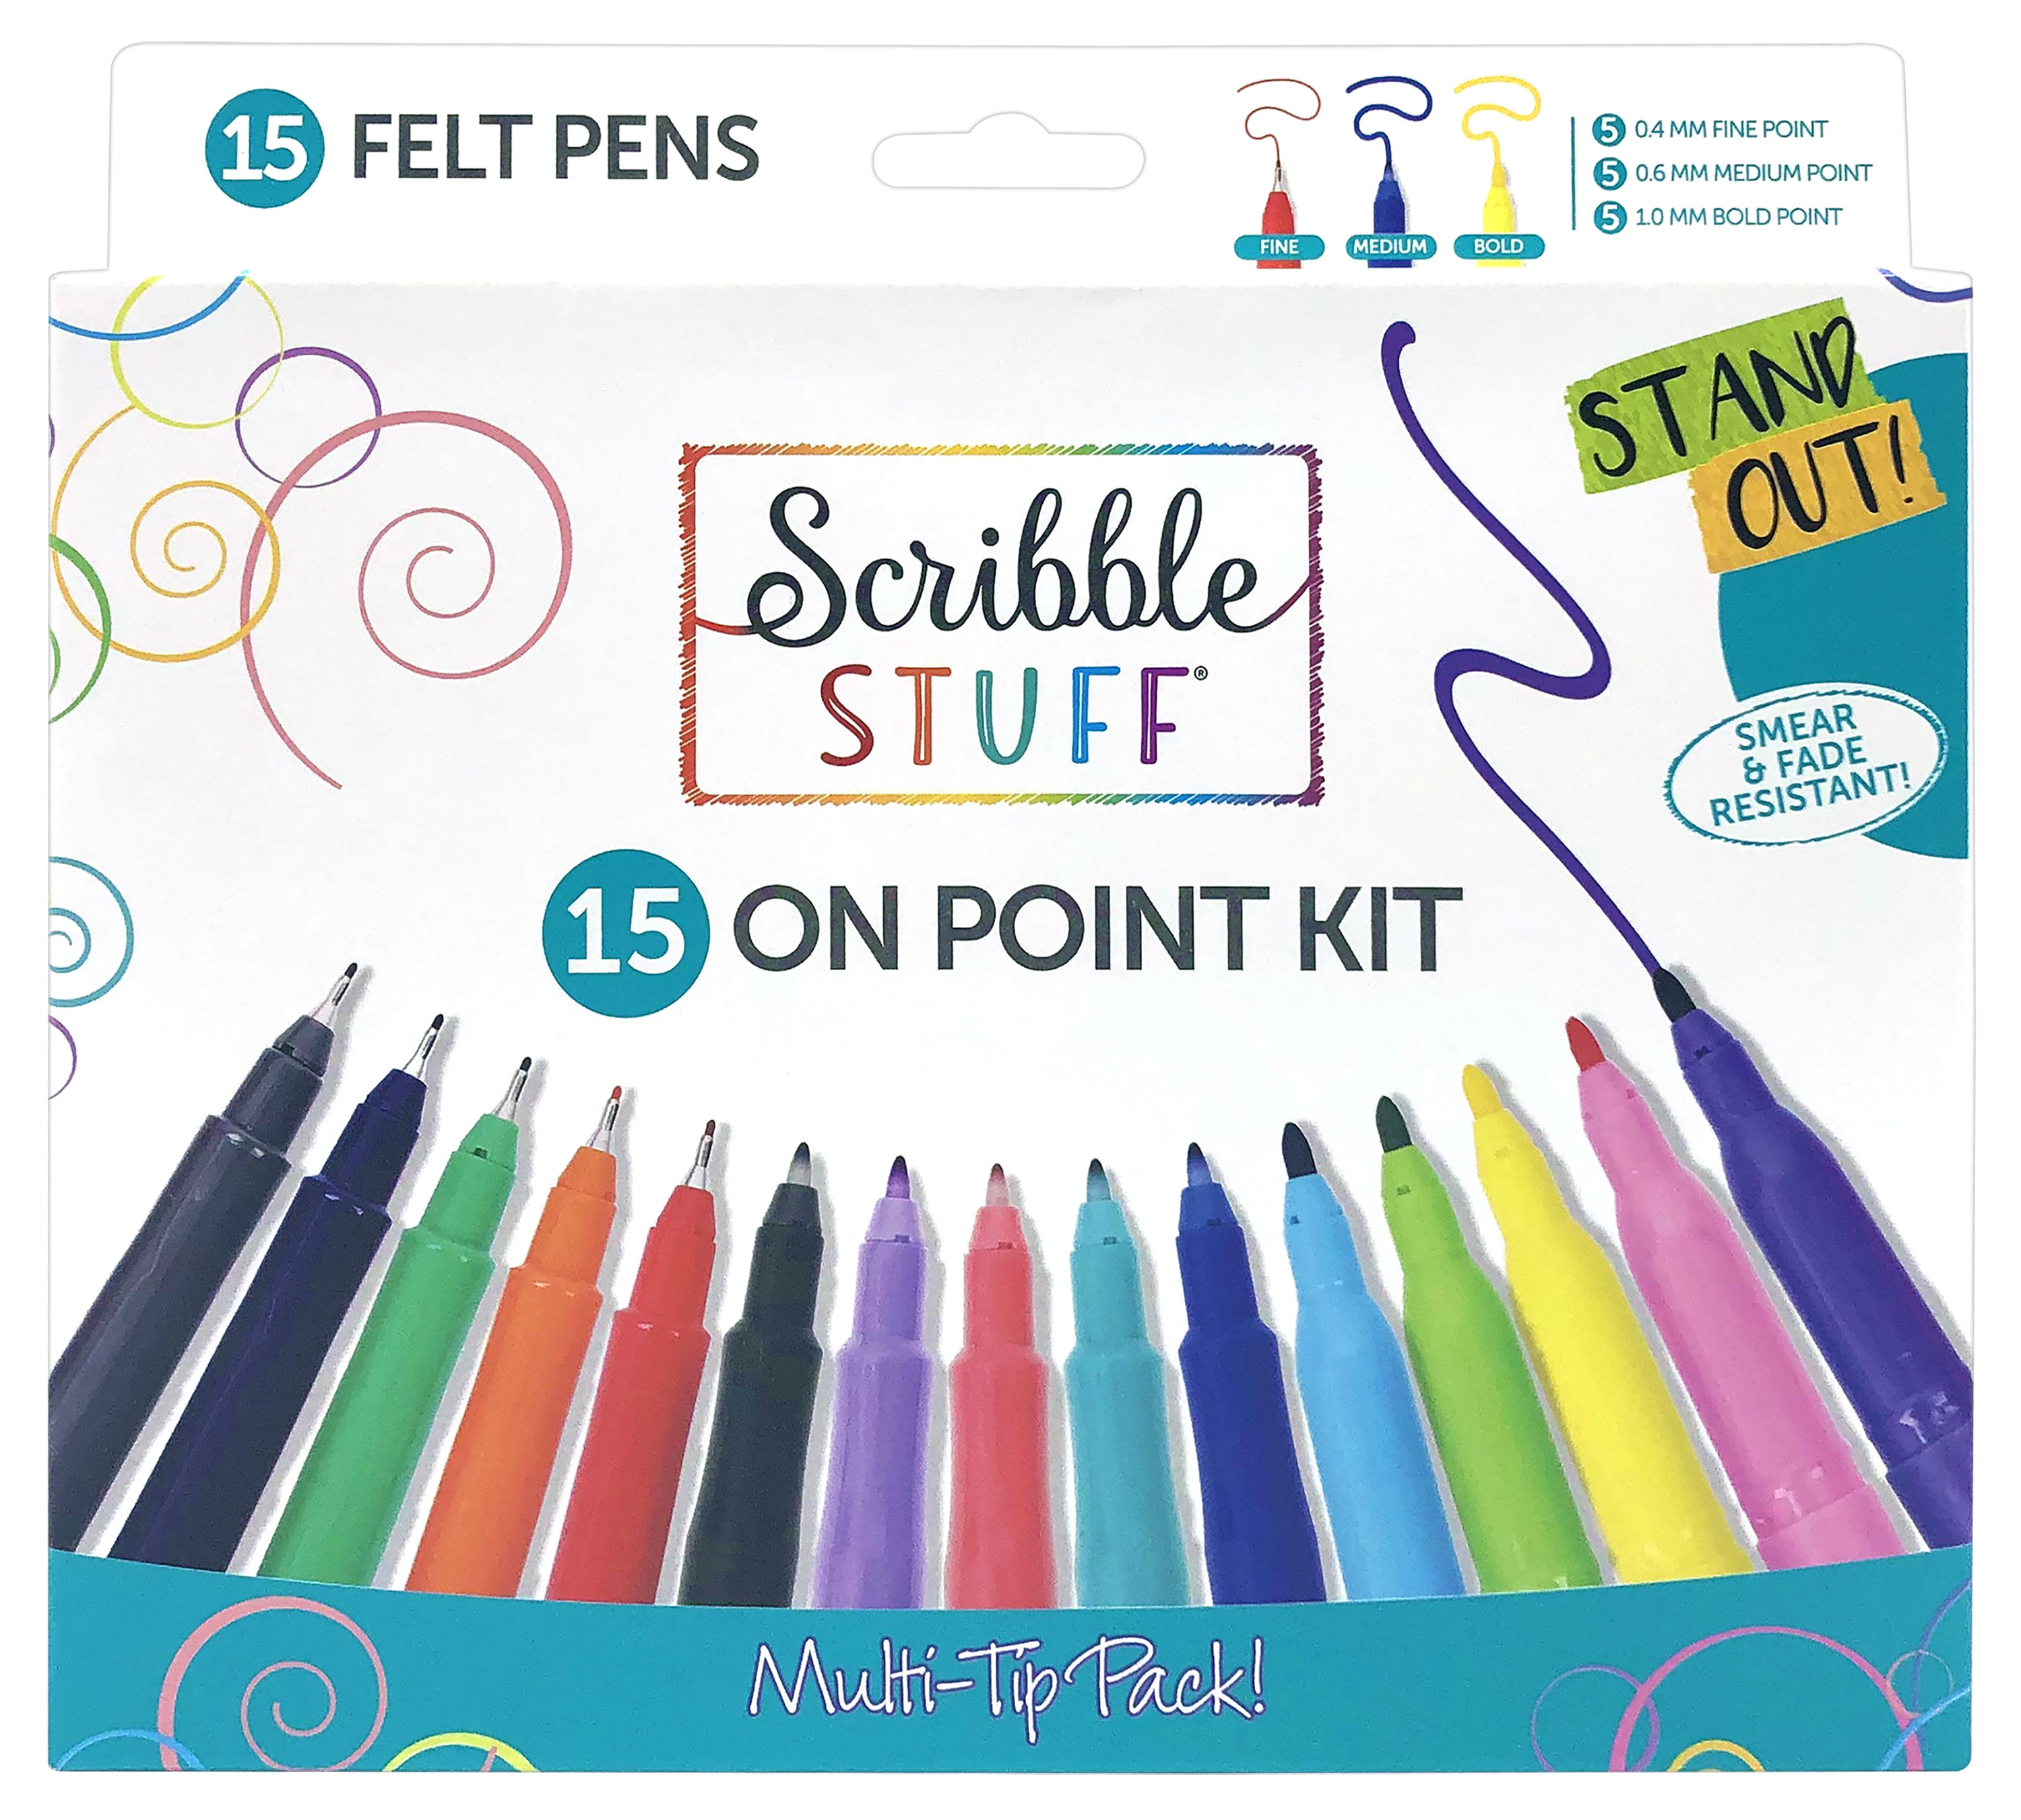 Scribble Stuff 30 Felt Pens with Storage Case